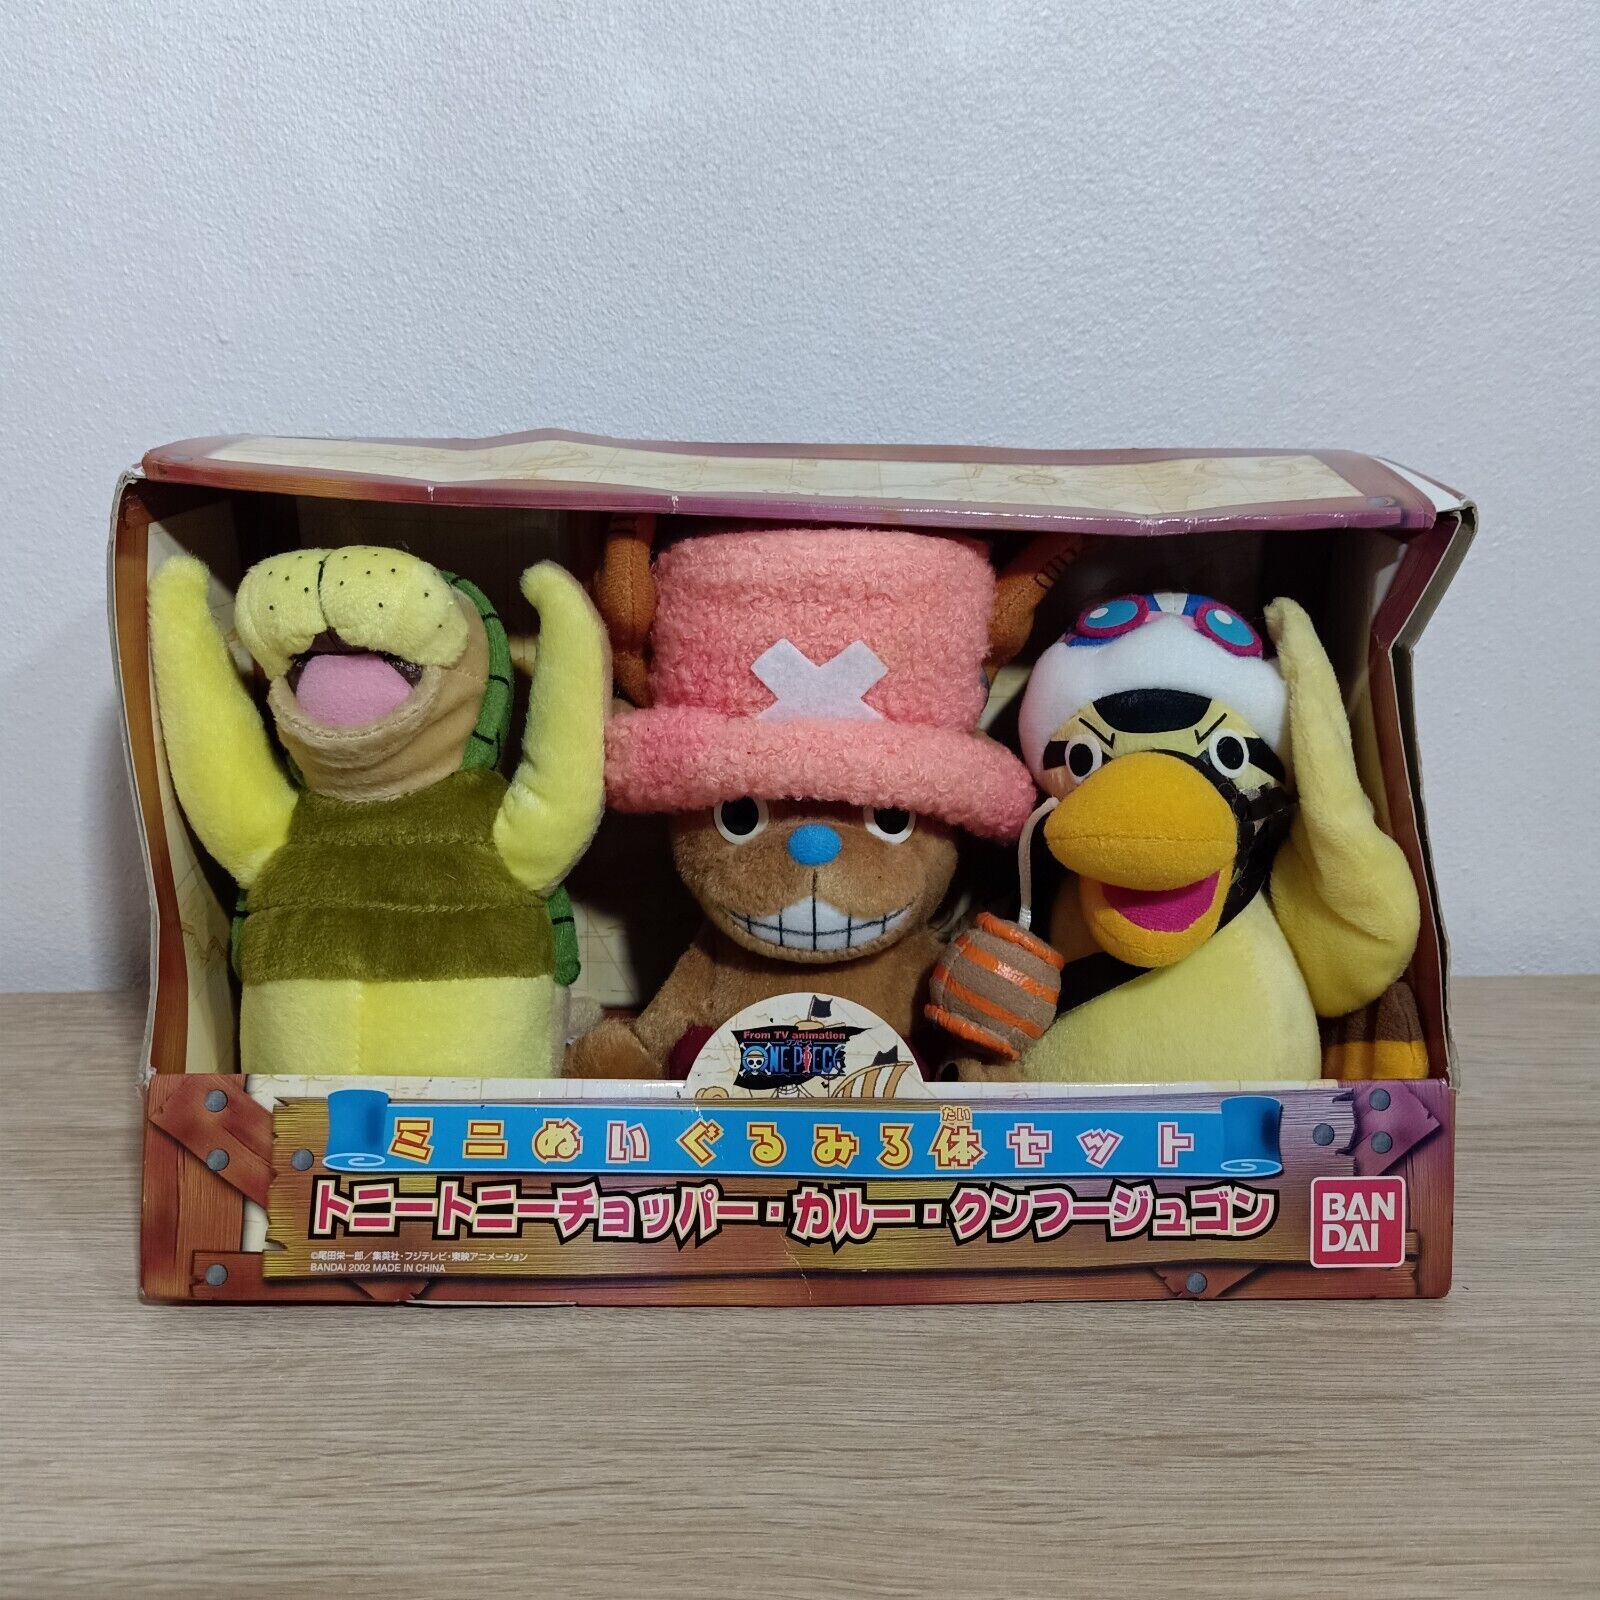 Bandai Japan One Piece Tony Chopper Kung Fu Dugong Karoo Plush Doll Toy Set MIB